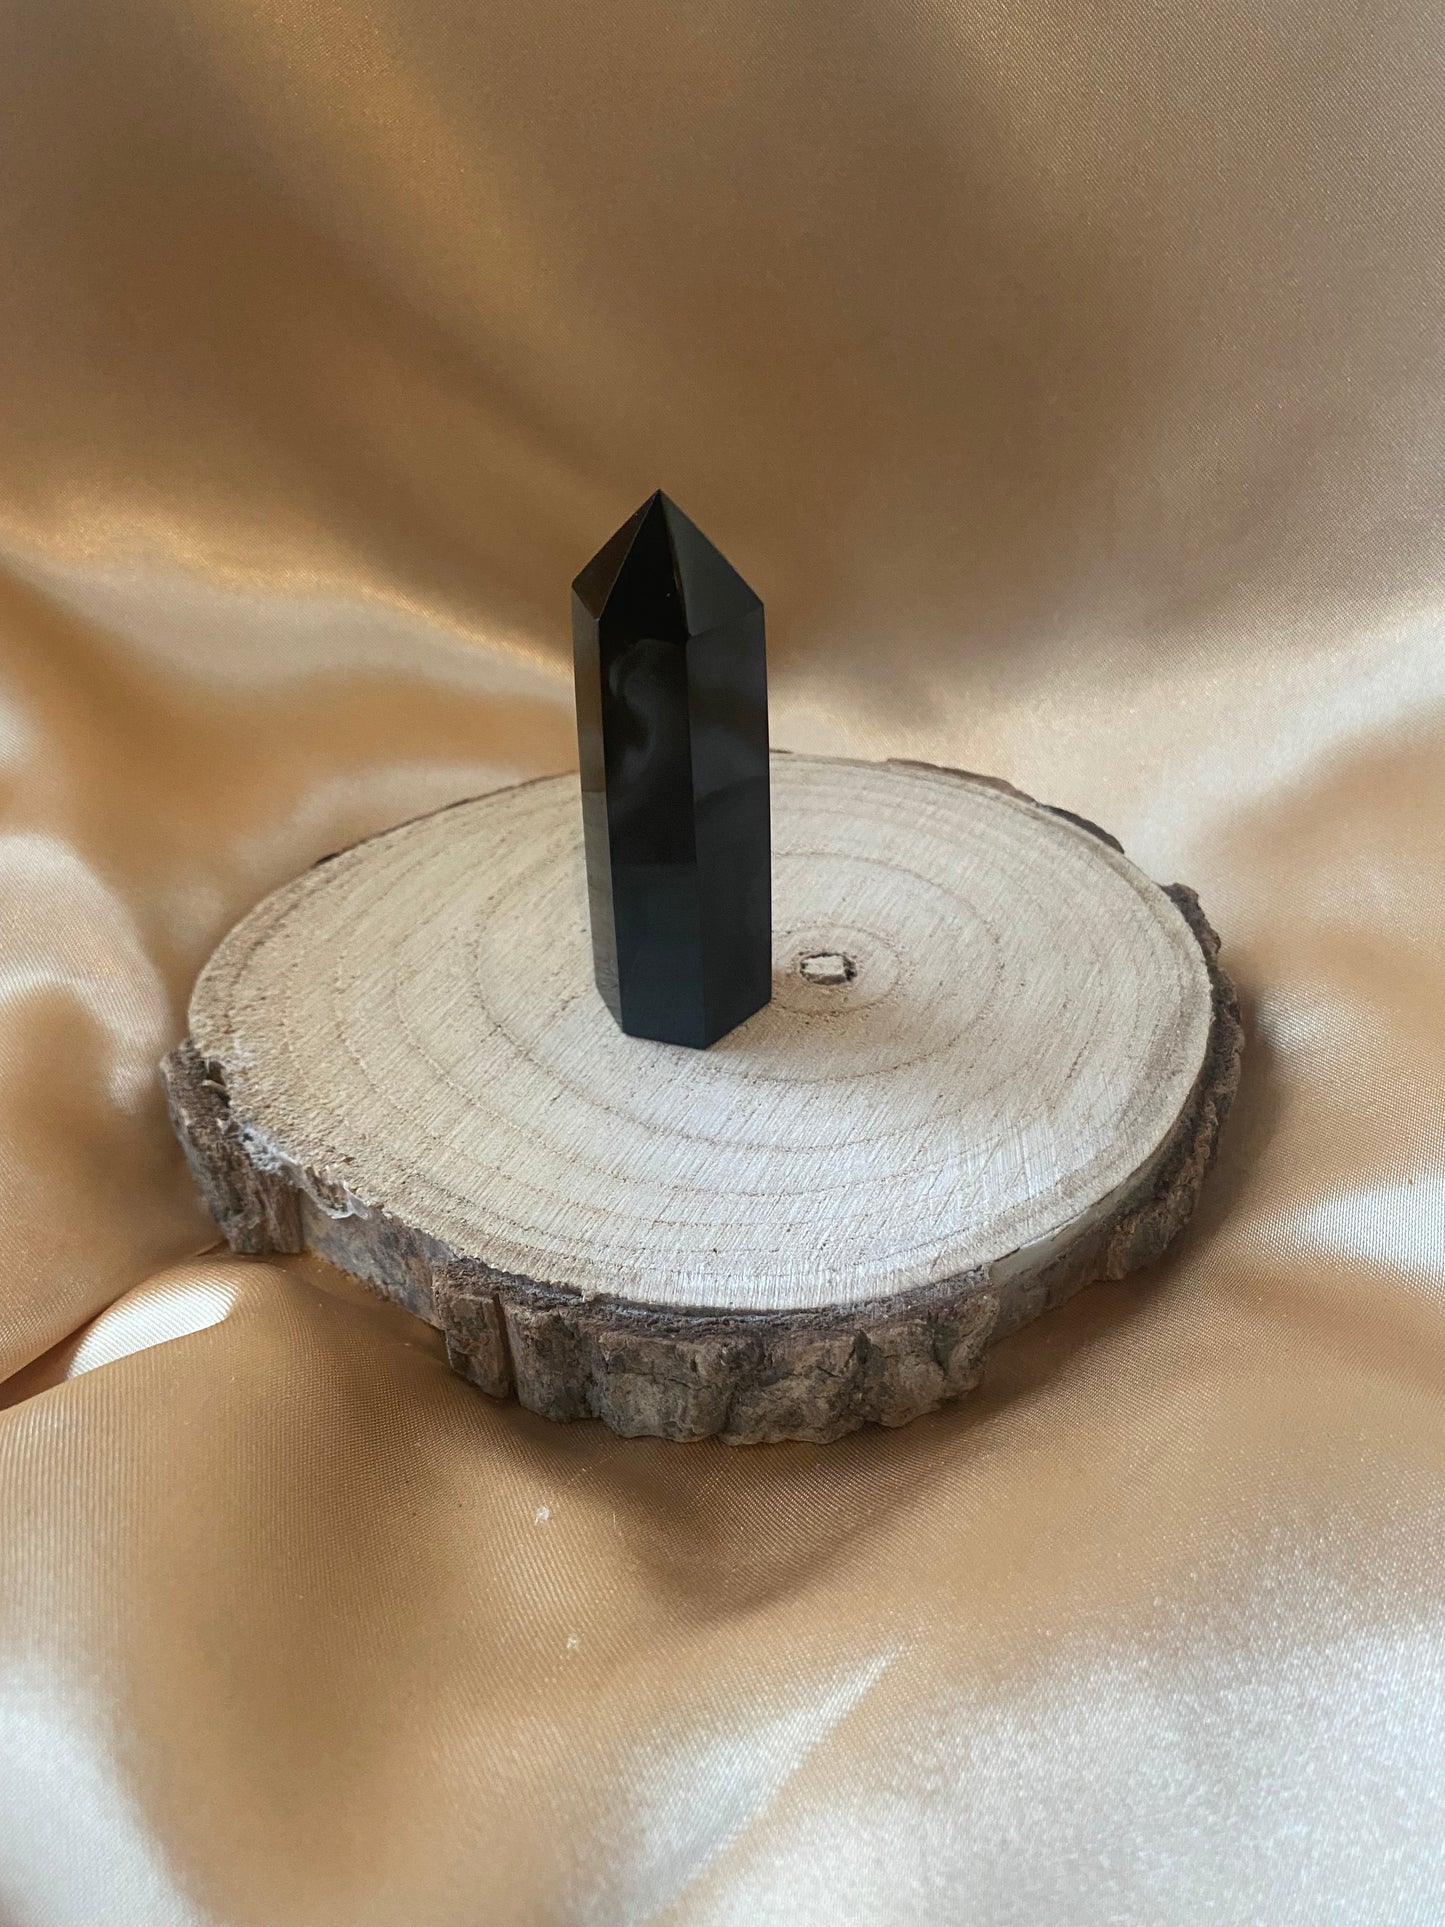 Black Obsidian Crystal Tower